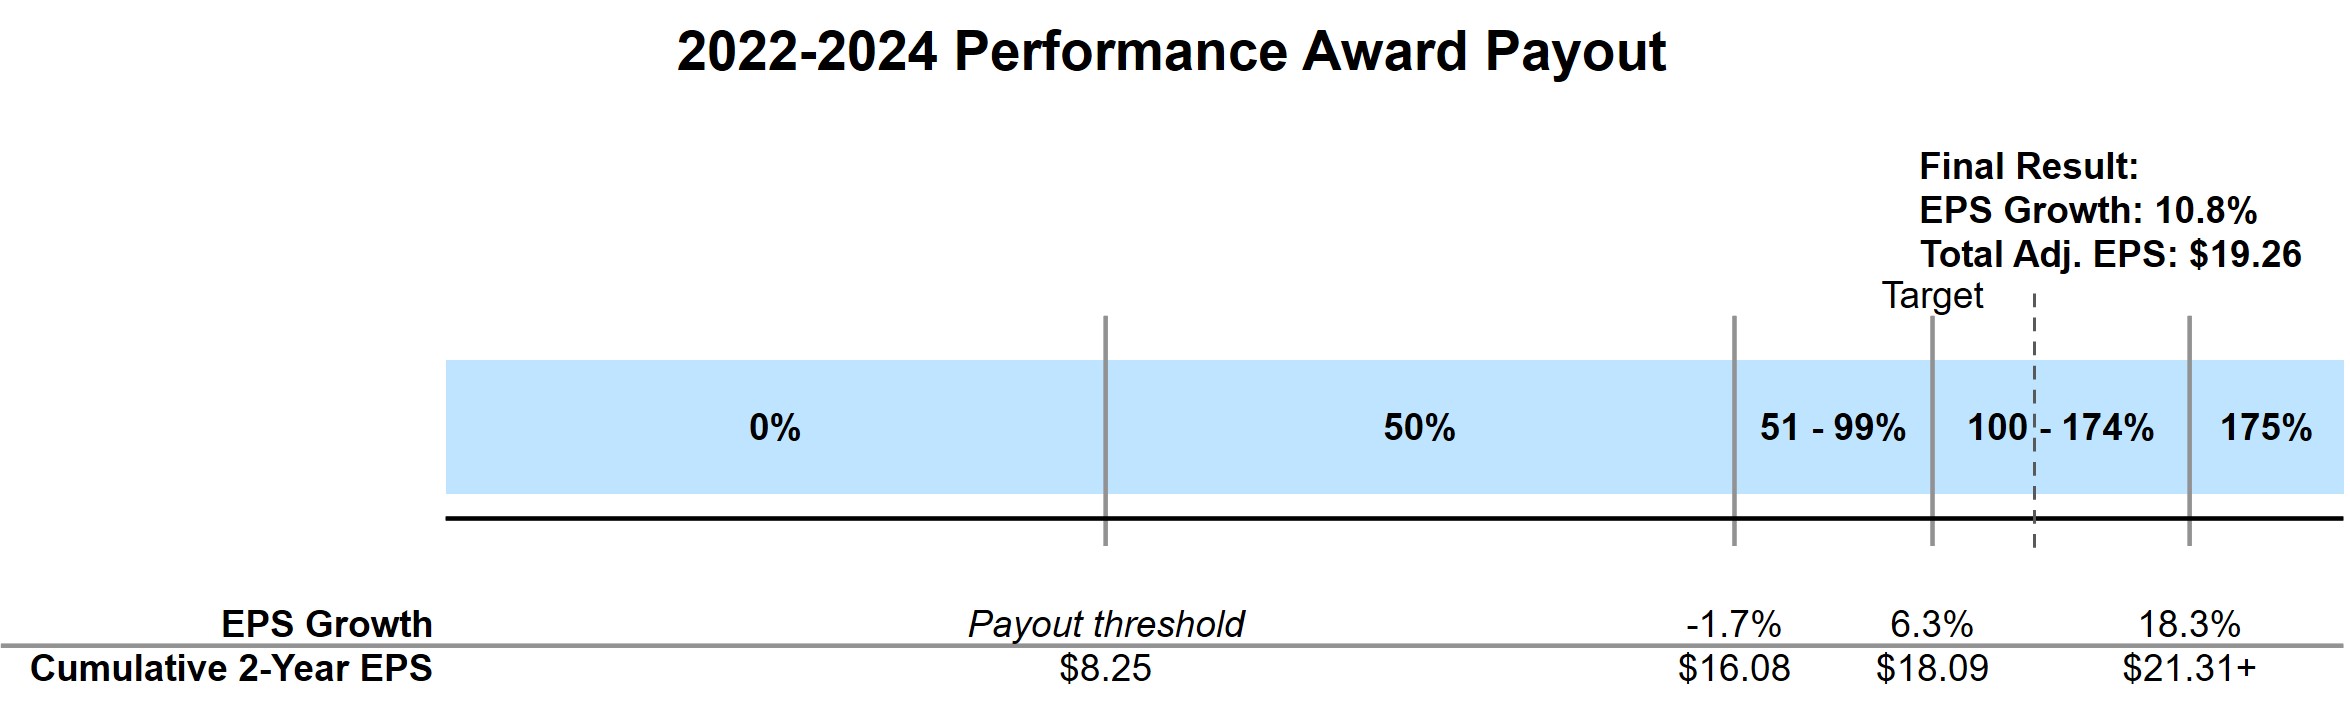 2022-2024 Performance Award Payout.jpg